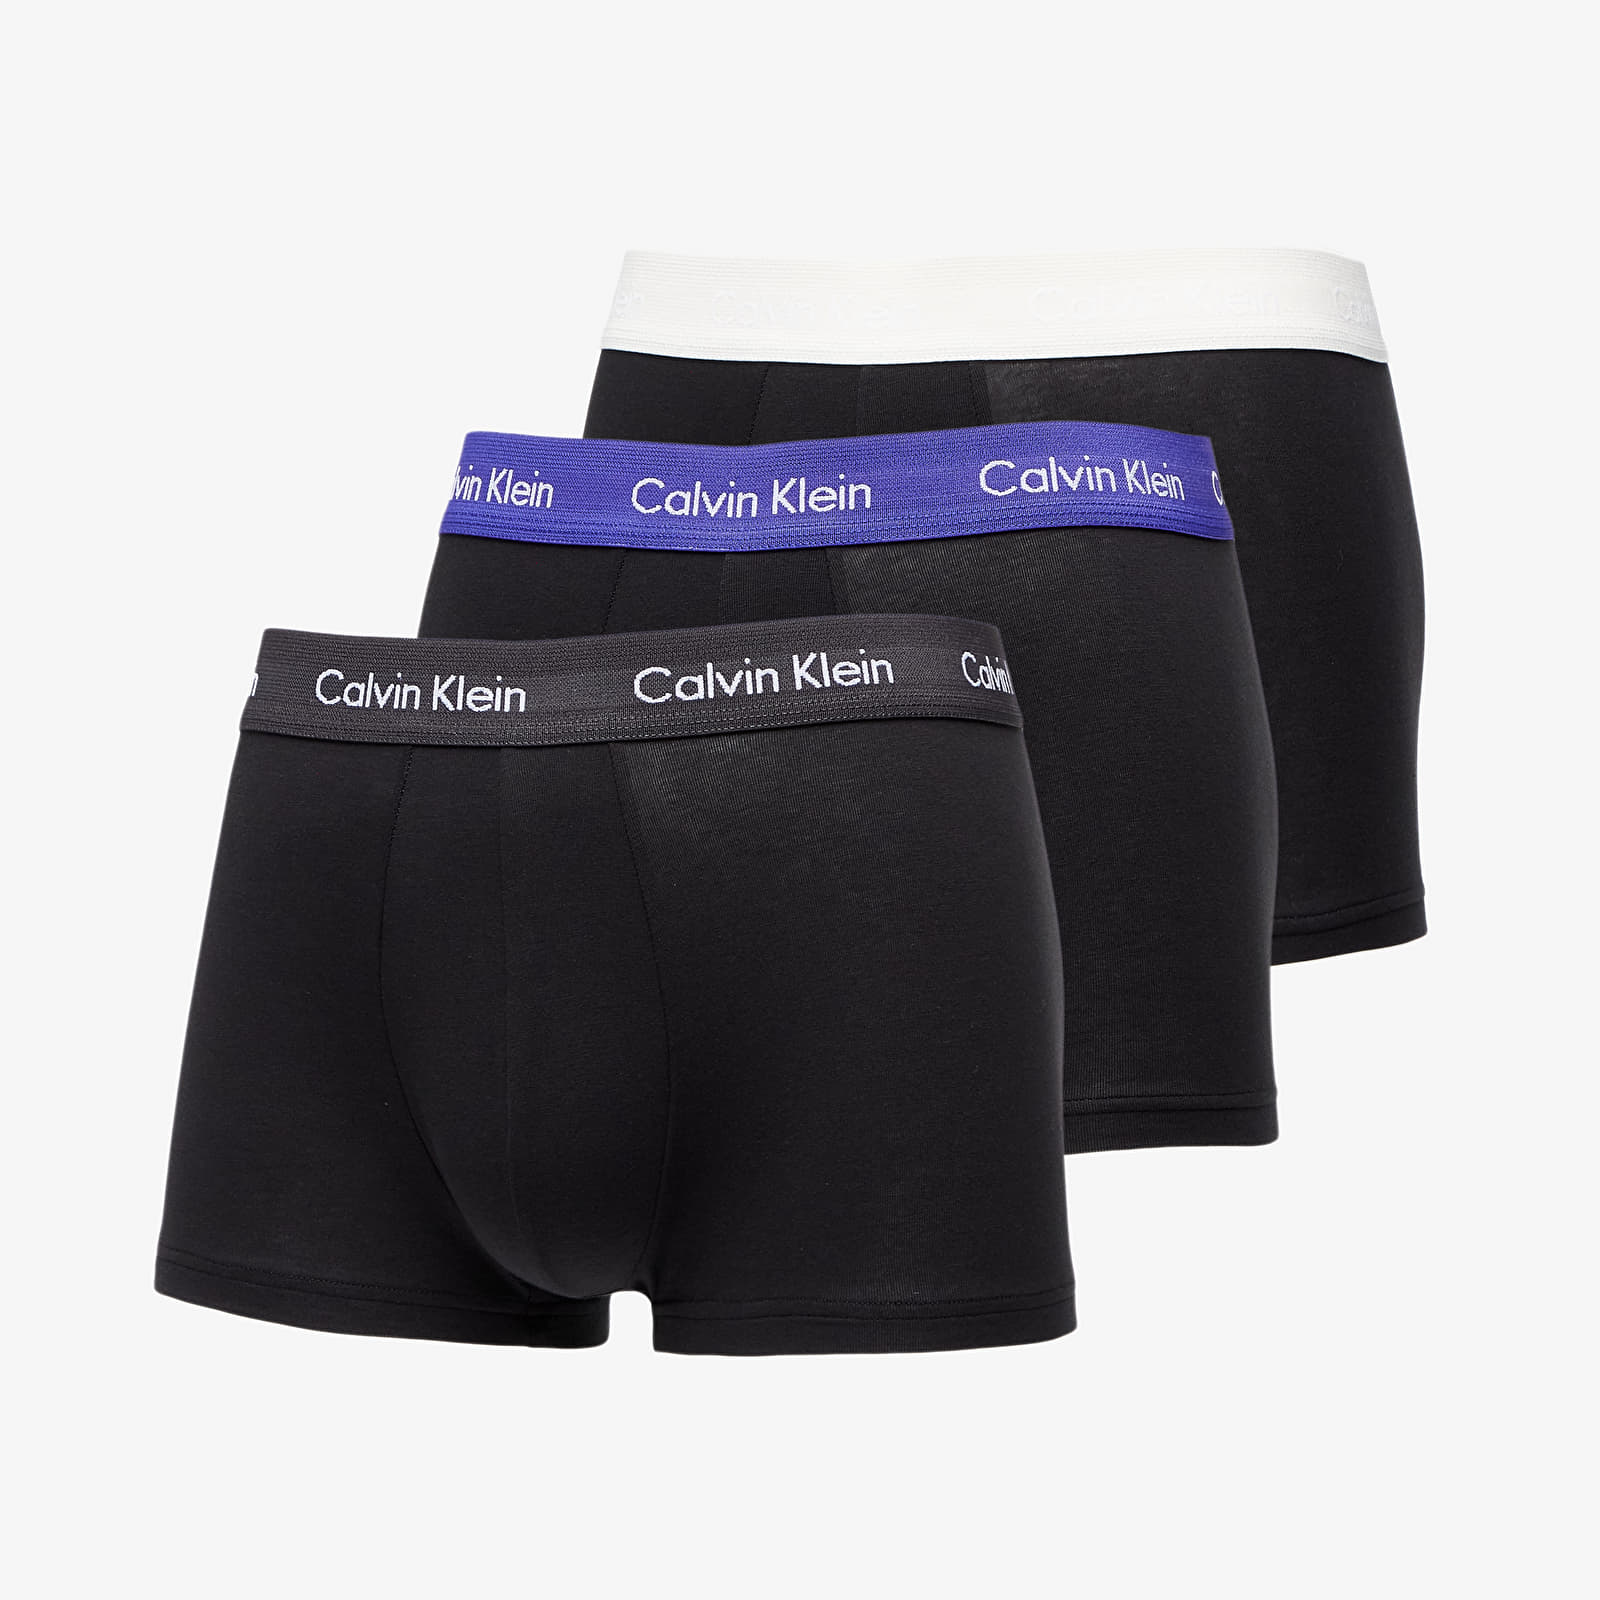 Boxeri Calvin Klein Cotton Stretch Classic Fit Low Rise Trunk 3-Pack Black/ Off White/ Black/ Purple